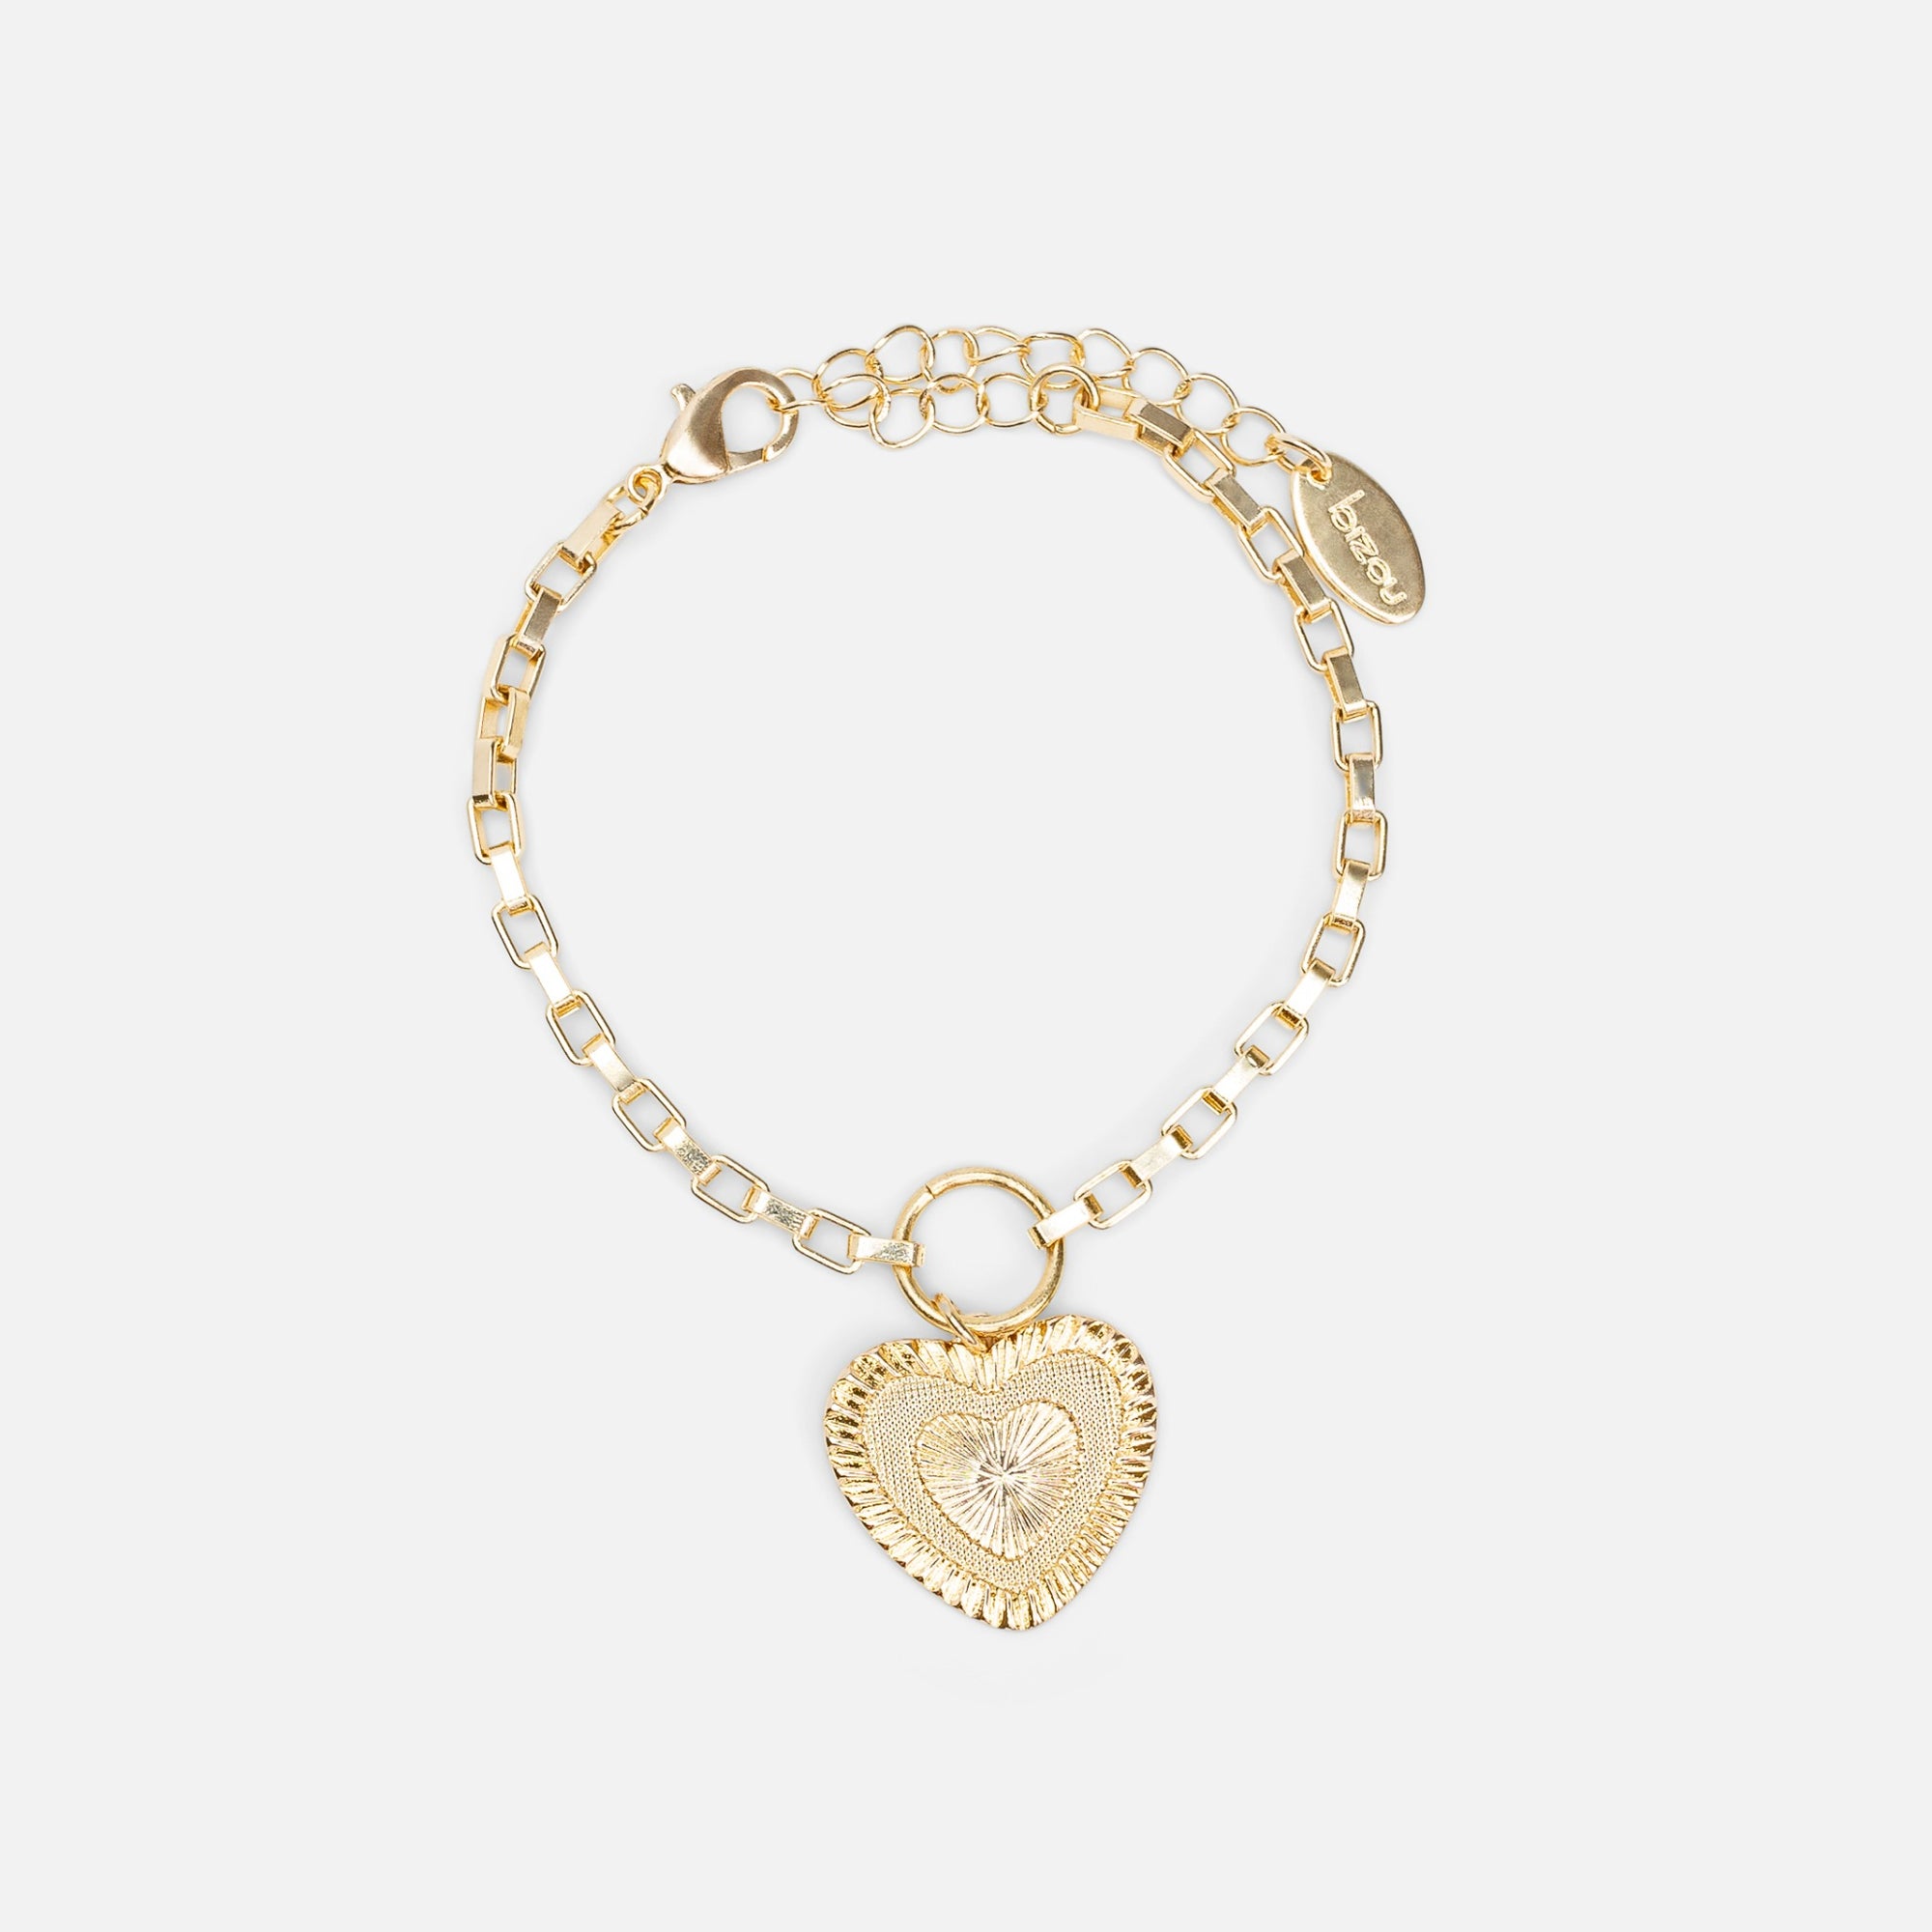 Golden chain bracelet with heart charm